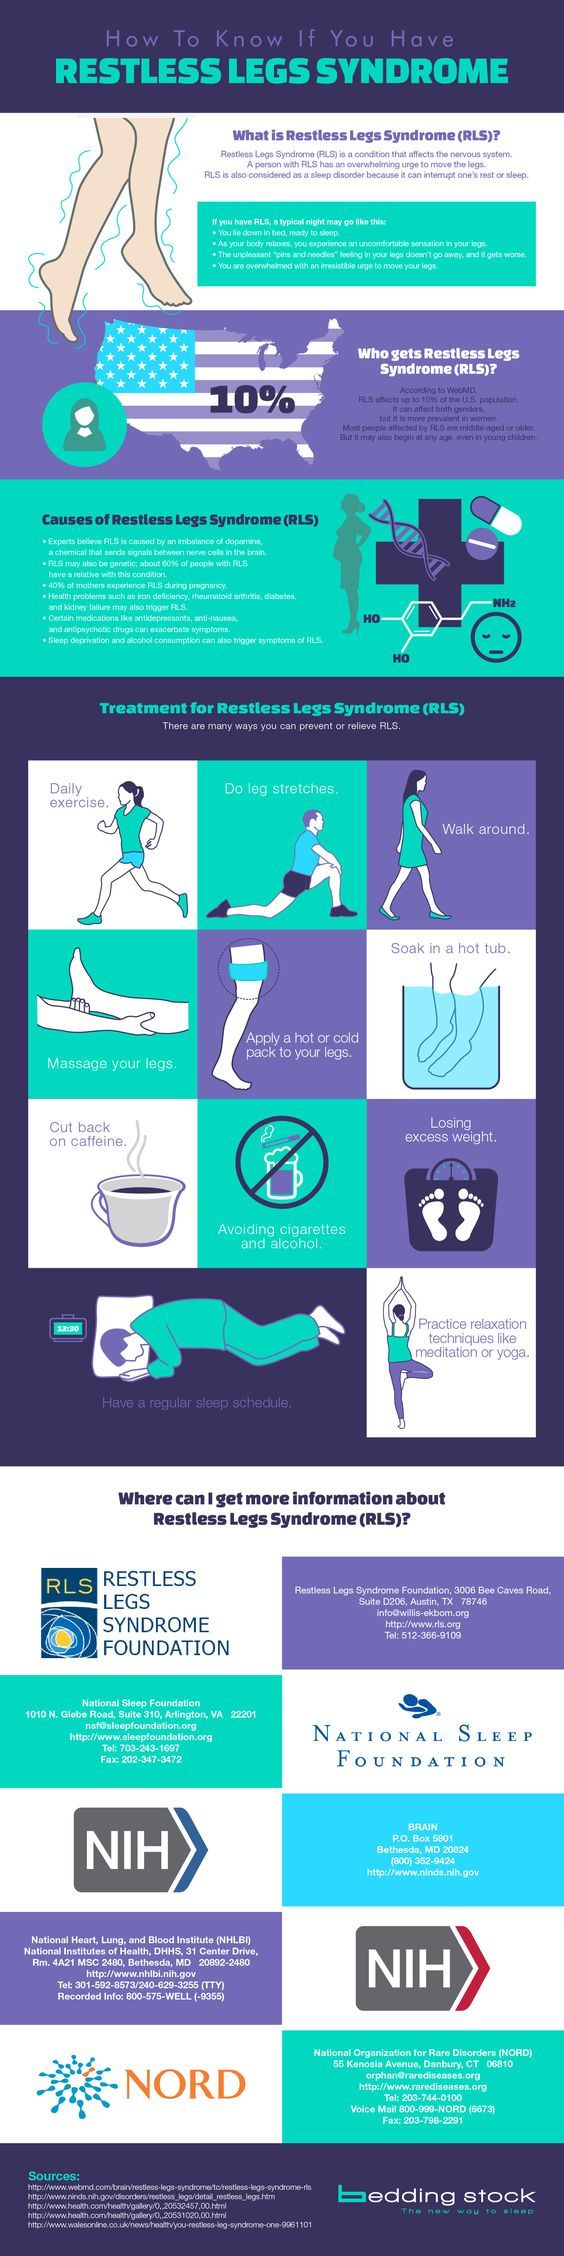 restless leg syndrome infographic